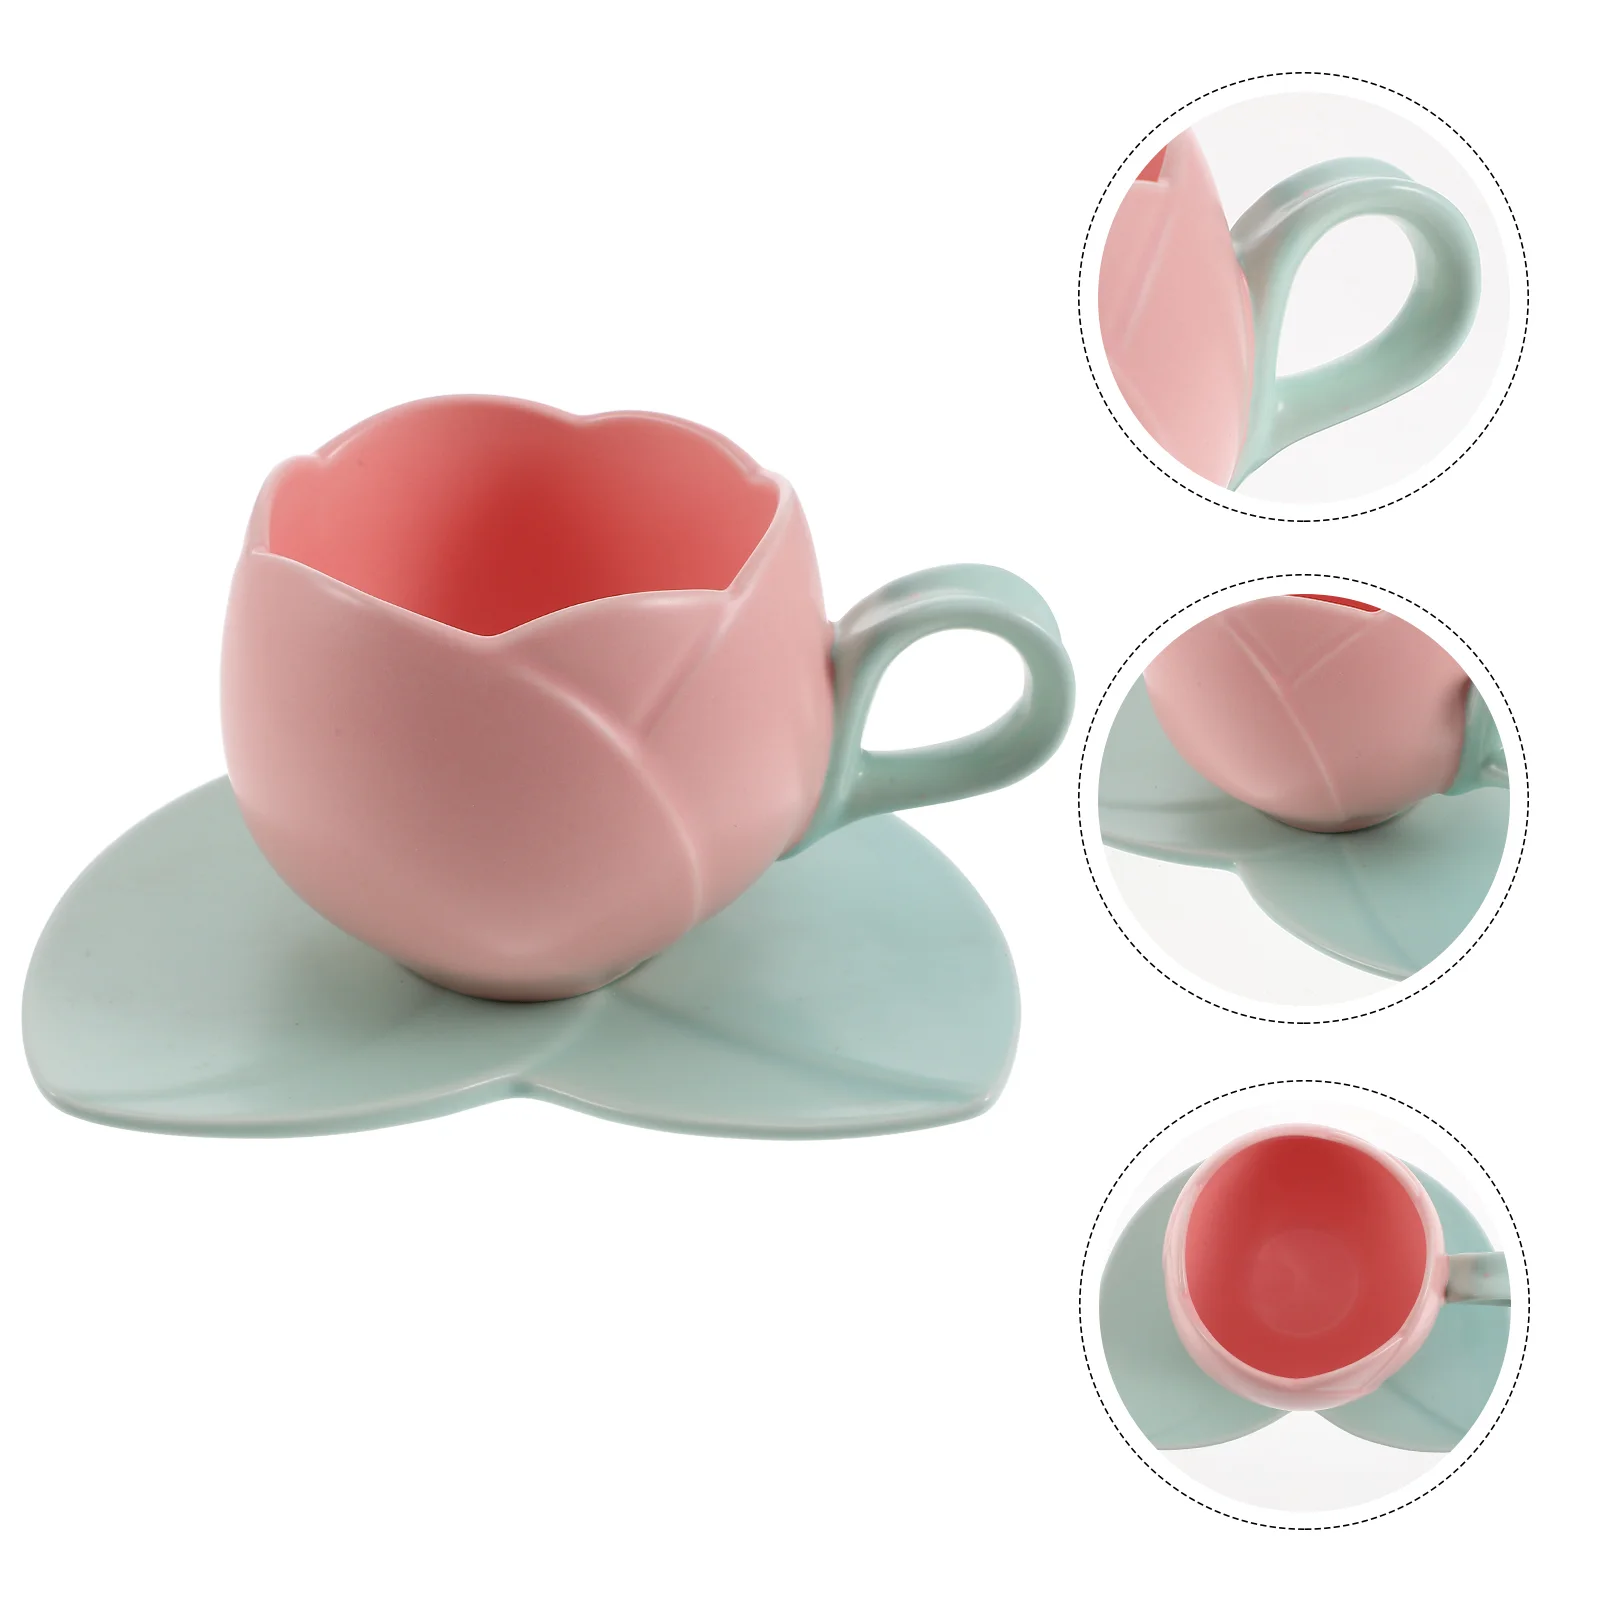 

Cup Coffee Mugs Ceramic Mug Tea Saucer Cups Porcelain Funny Tumbler Espresso Flower Tulip Drinking Water Cappuccino Latte Set